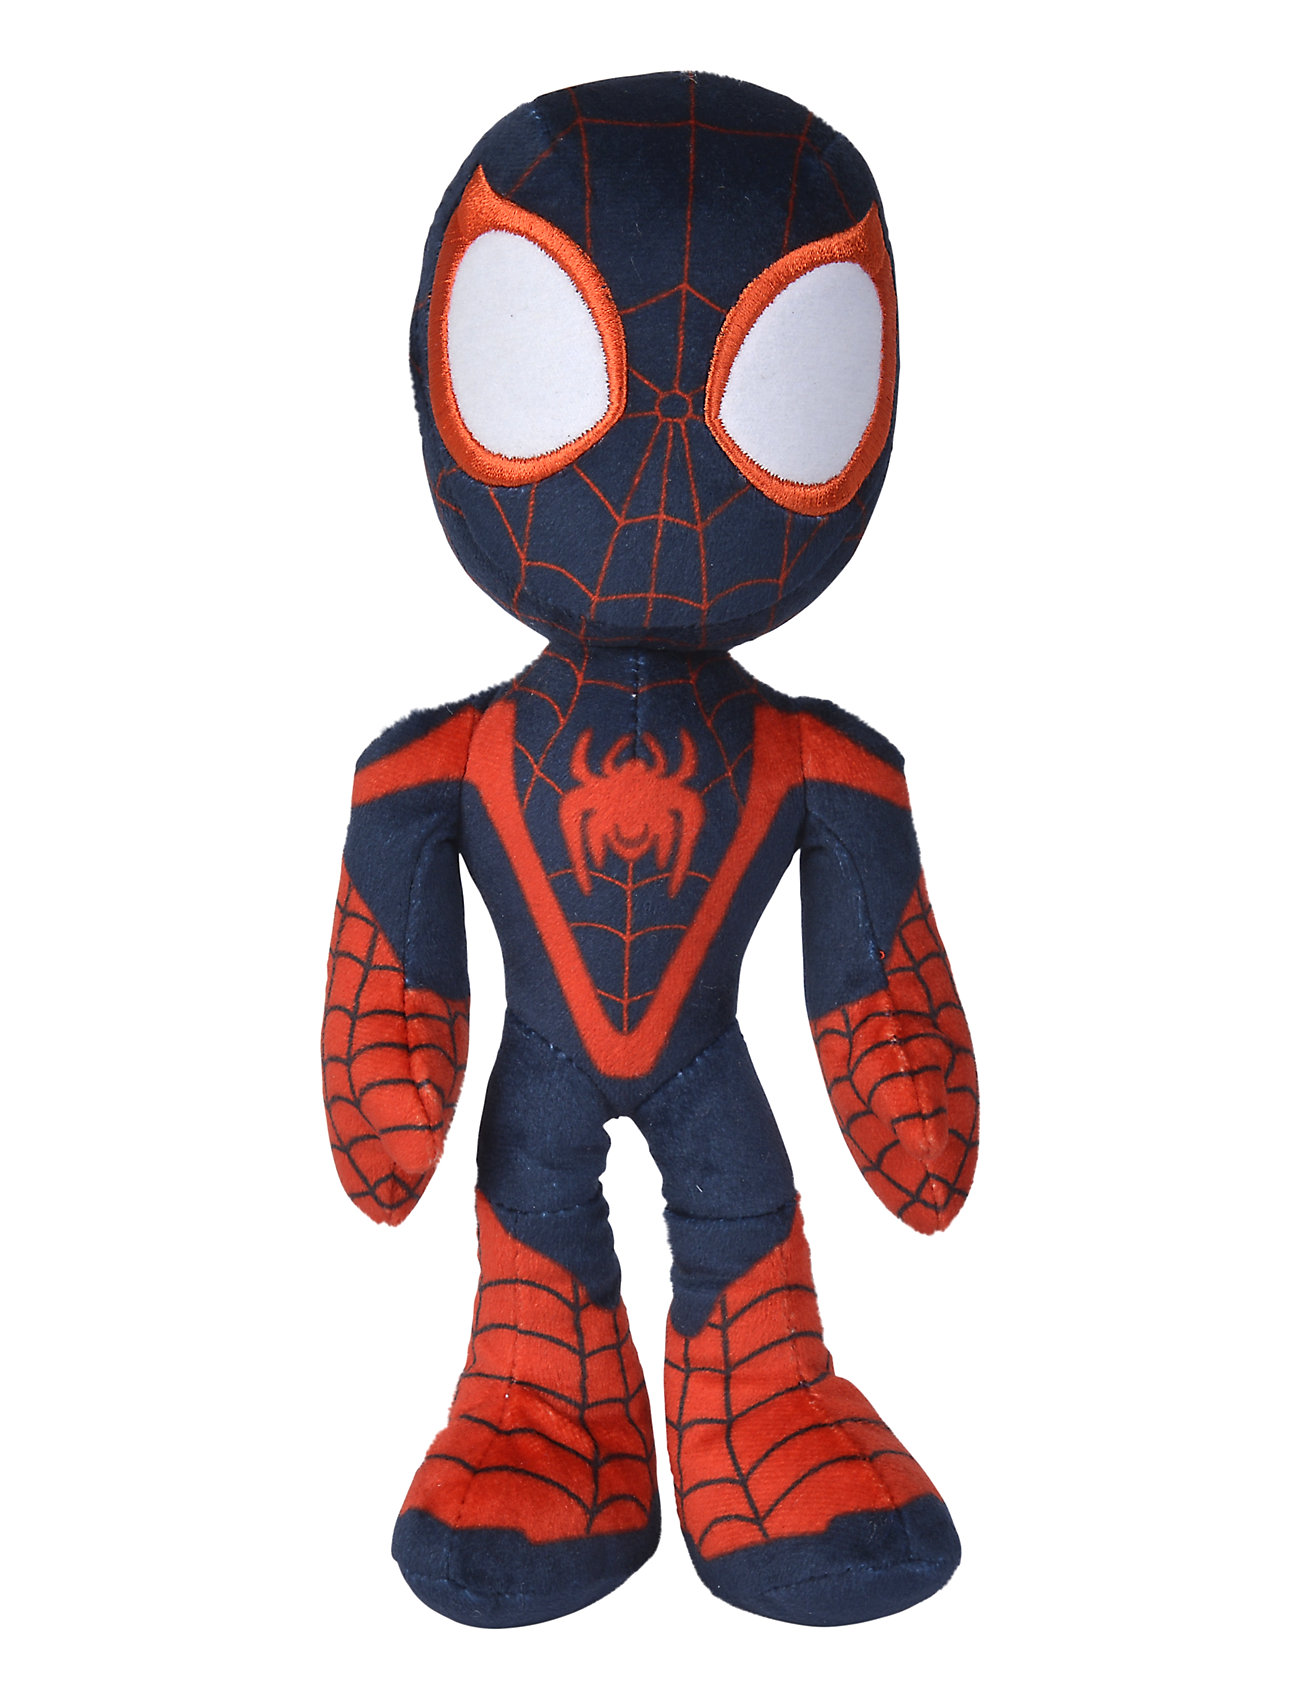 Spider-man "Disney - Miles Morales W/Gid Eyes Toys Soft Stuffed Multi/patterned Spider-man"